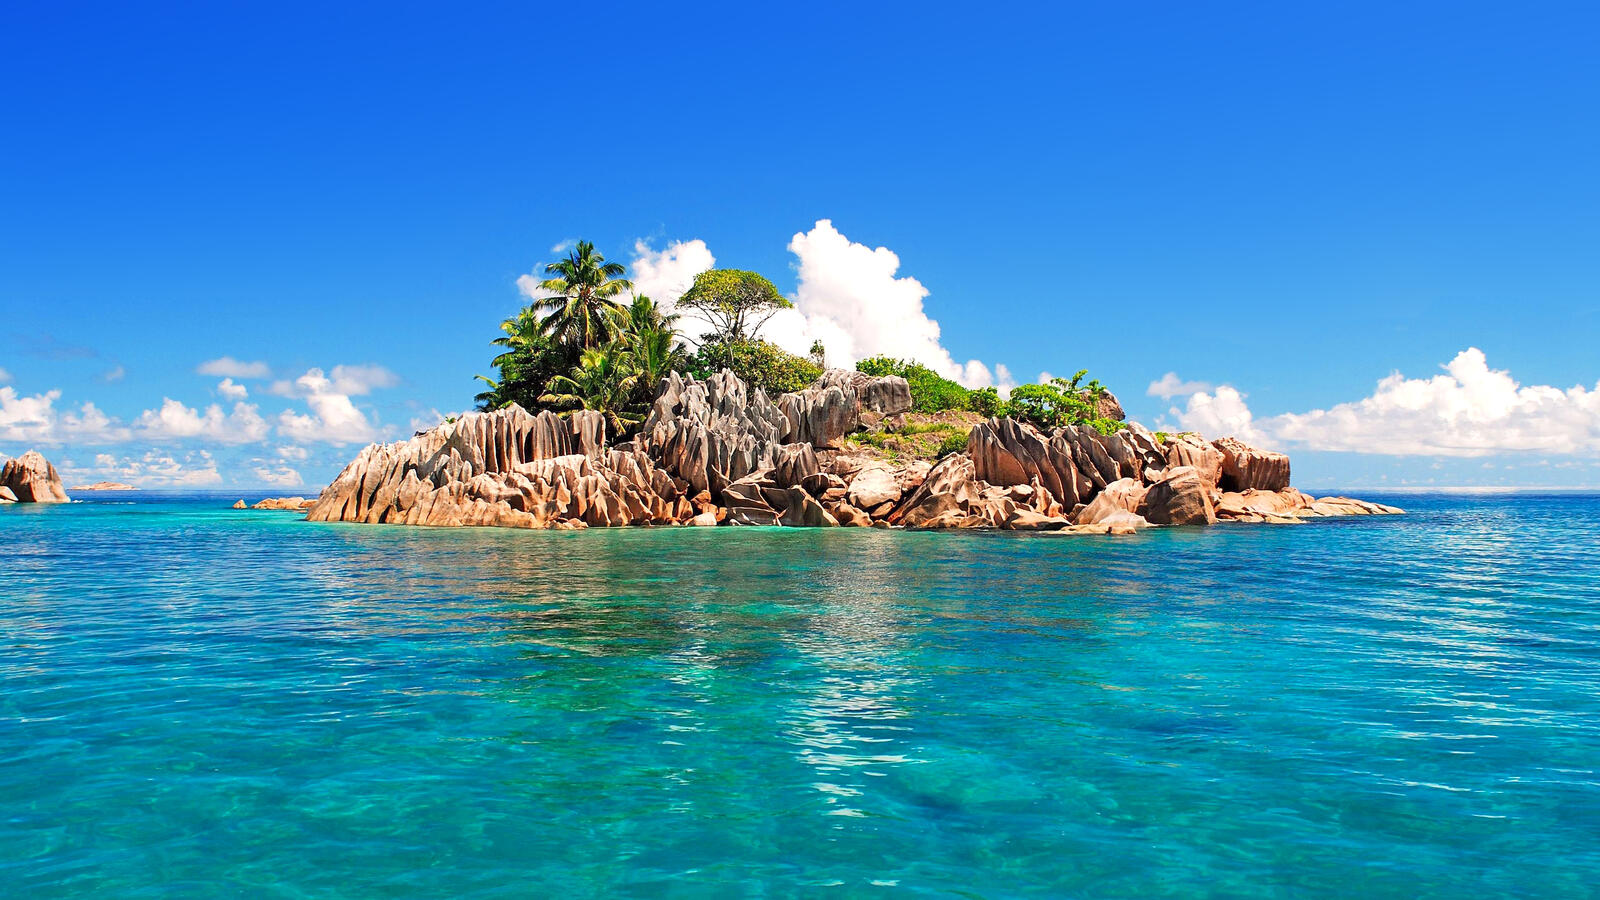 Обои пейзажи море Seychelles на рабочий стол